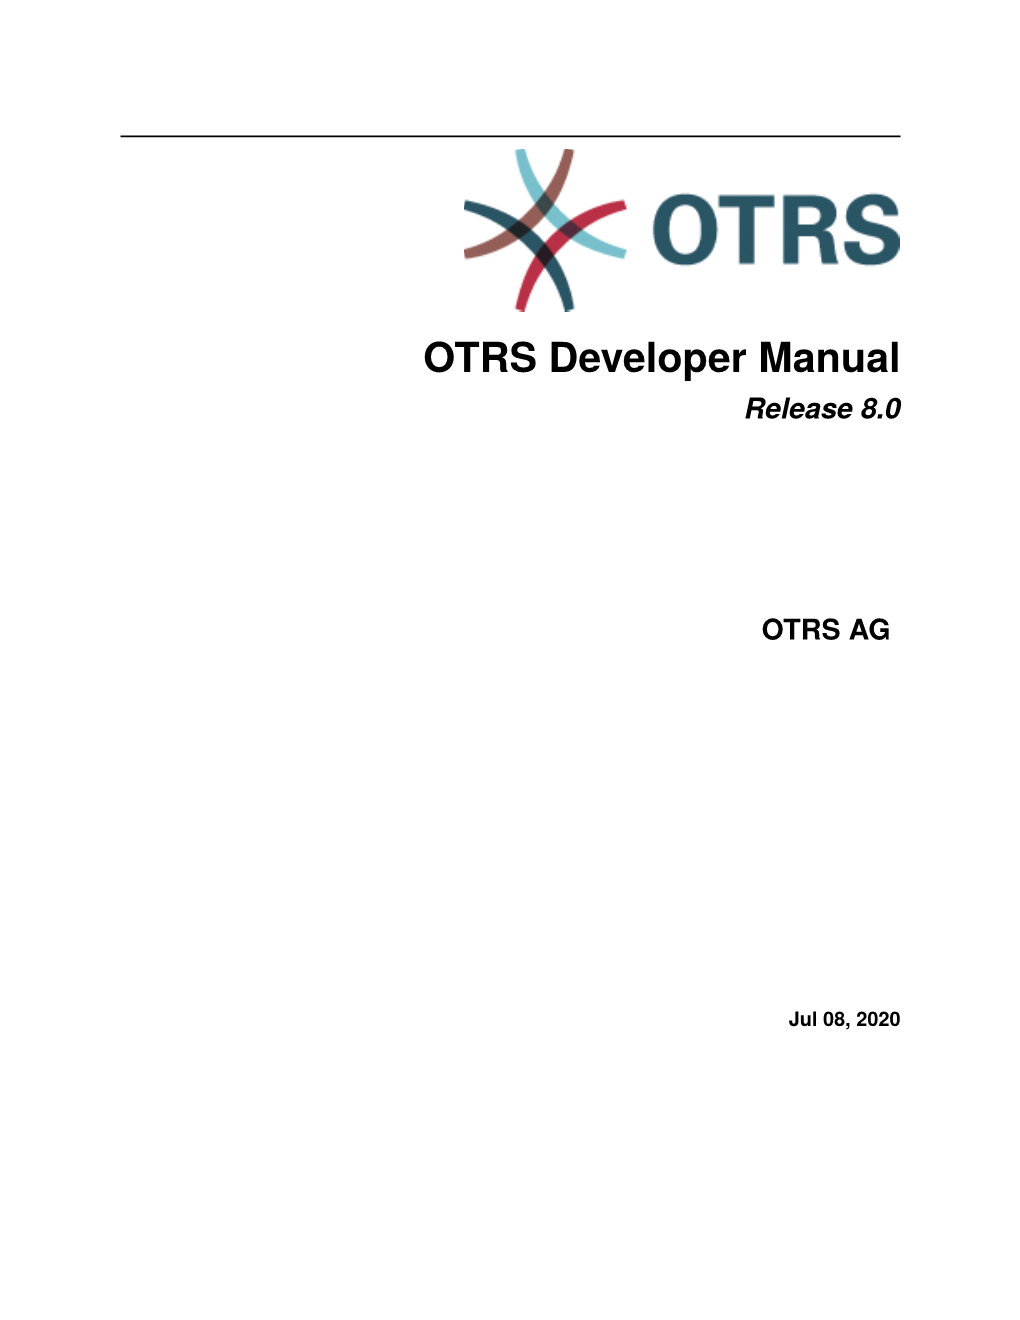 OTRS Developer Manual Release 8.0